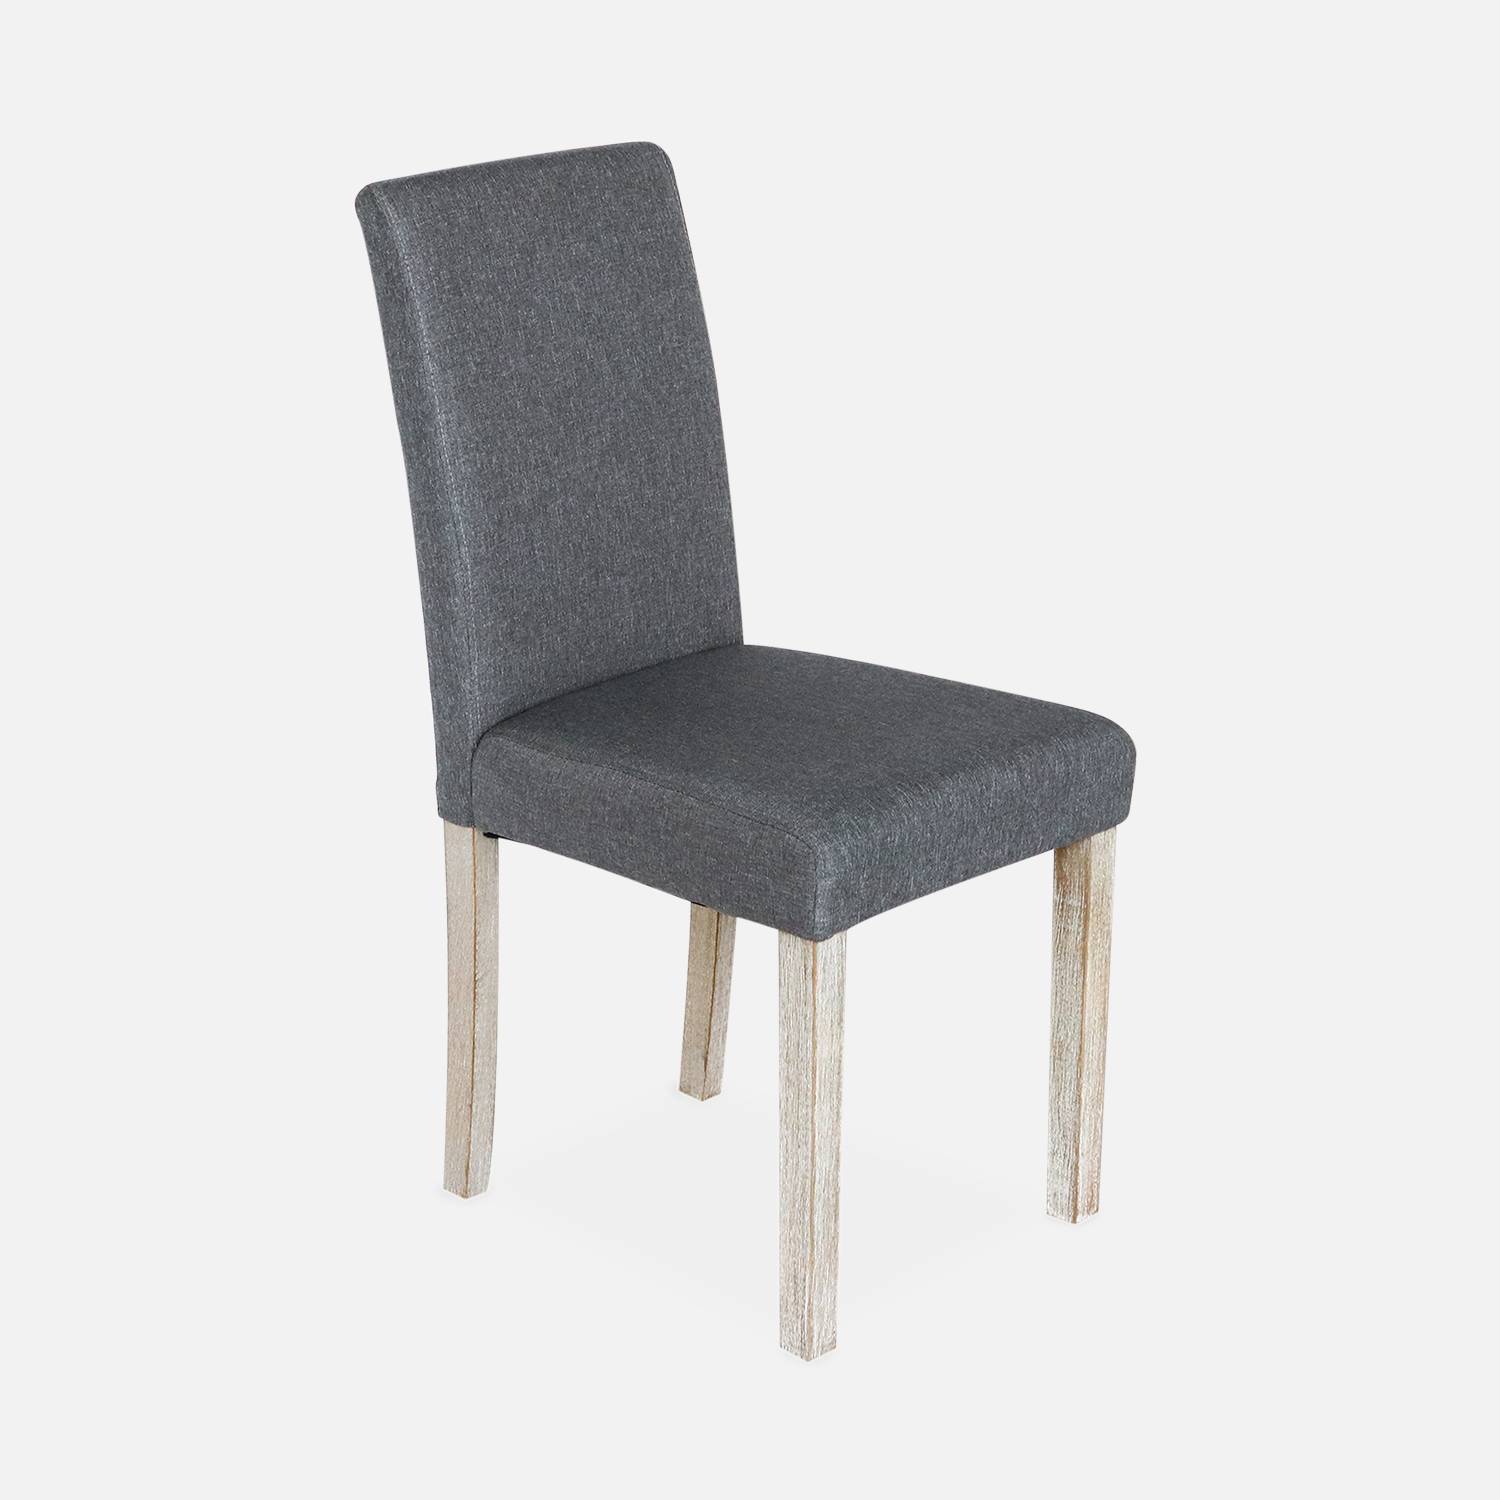 Set di 4 sedie - Rita - sedie in tessuto, gambe in legno ceruleo, grigio scuro Photo4